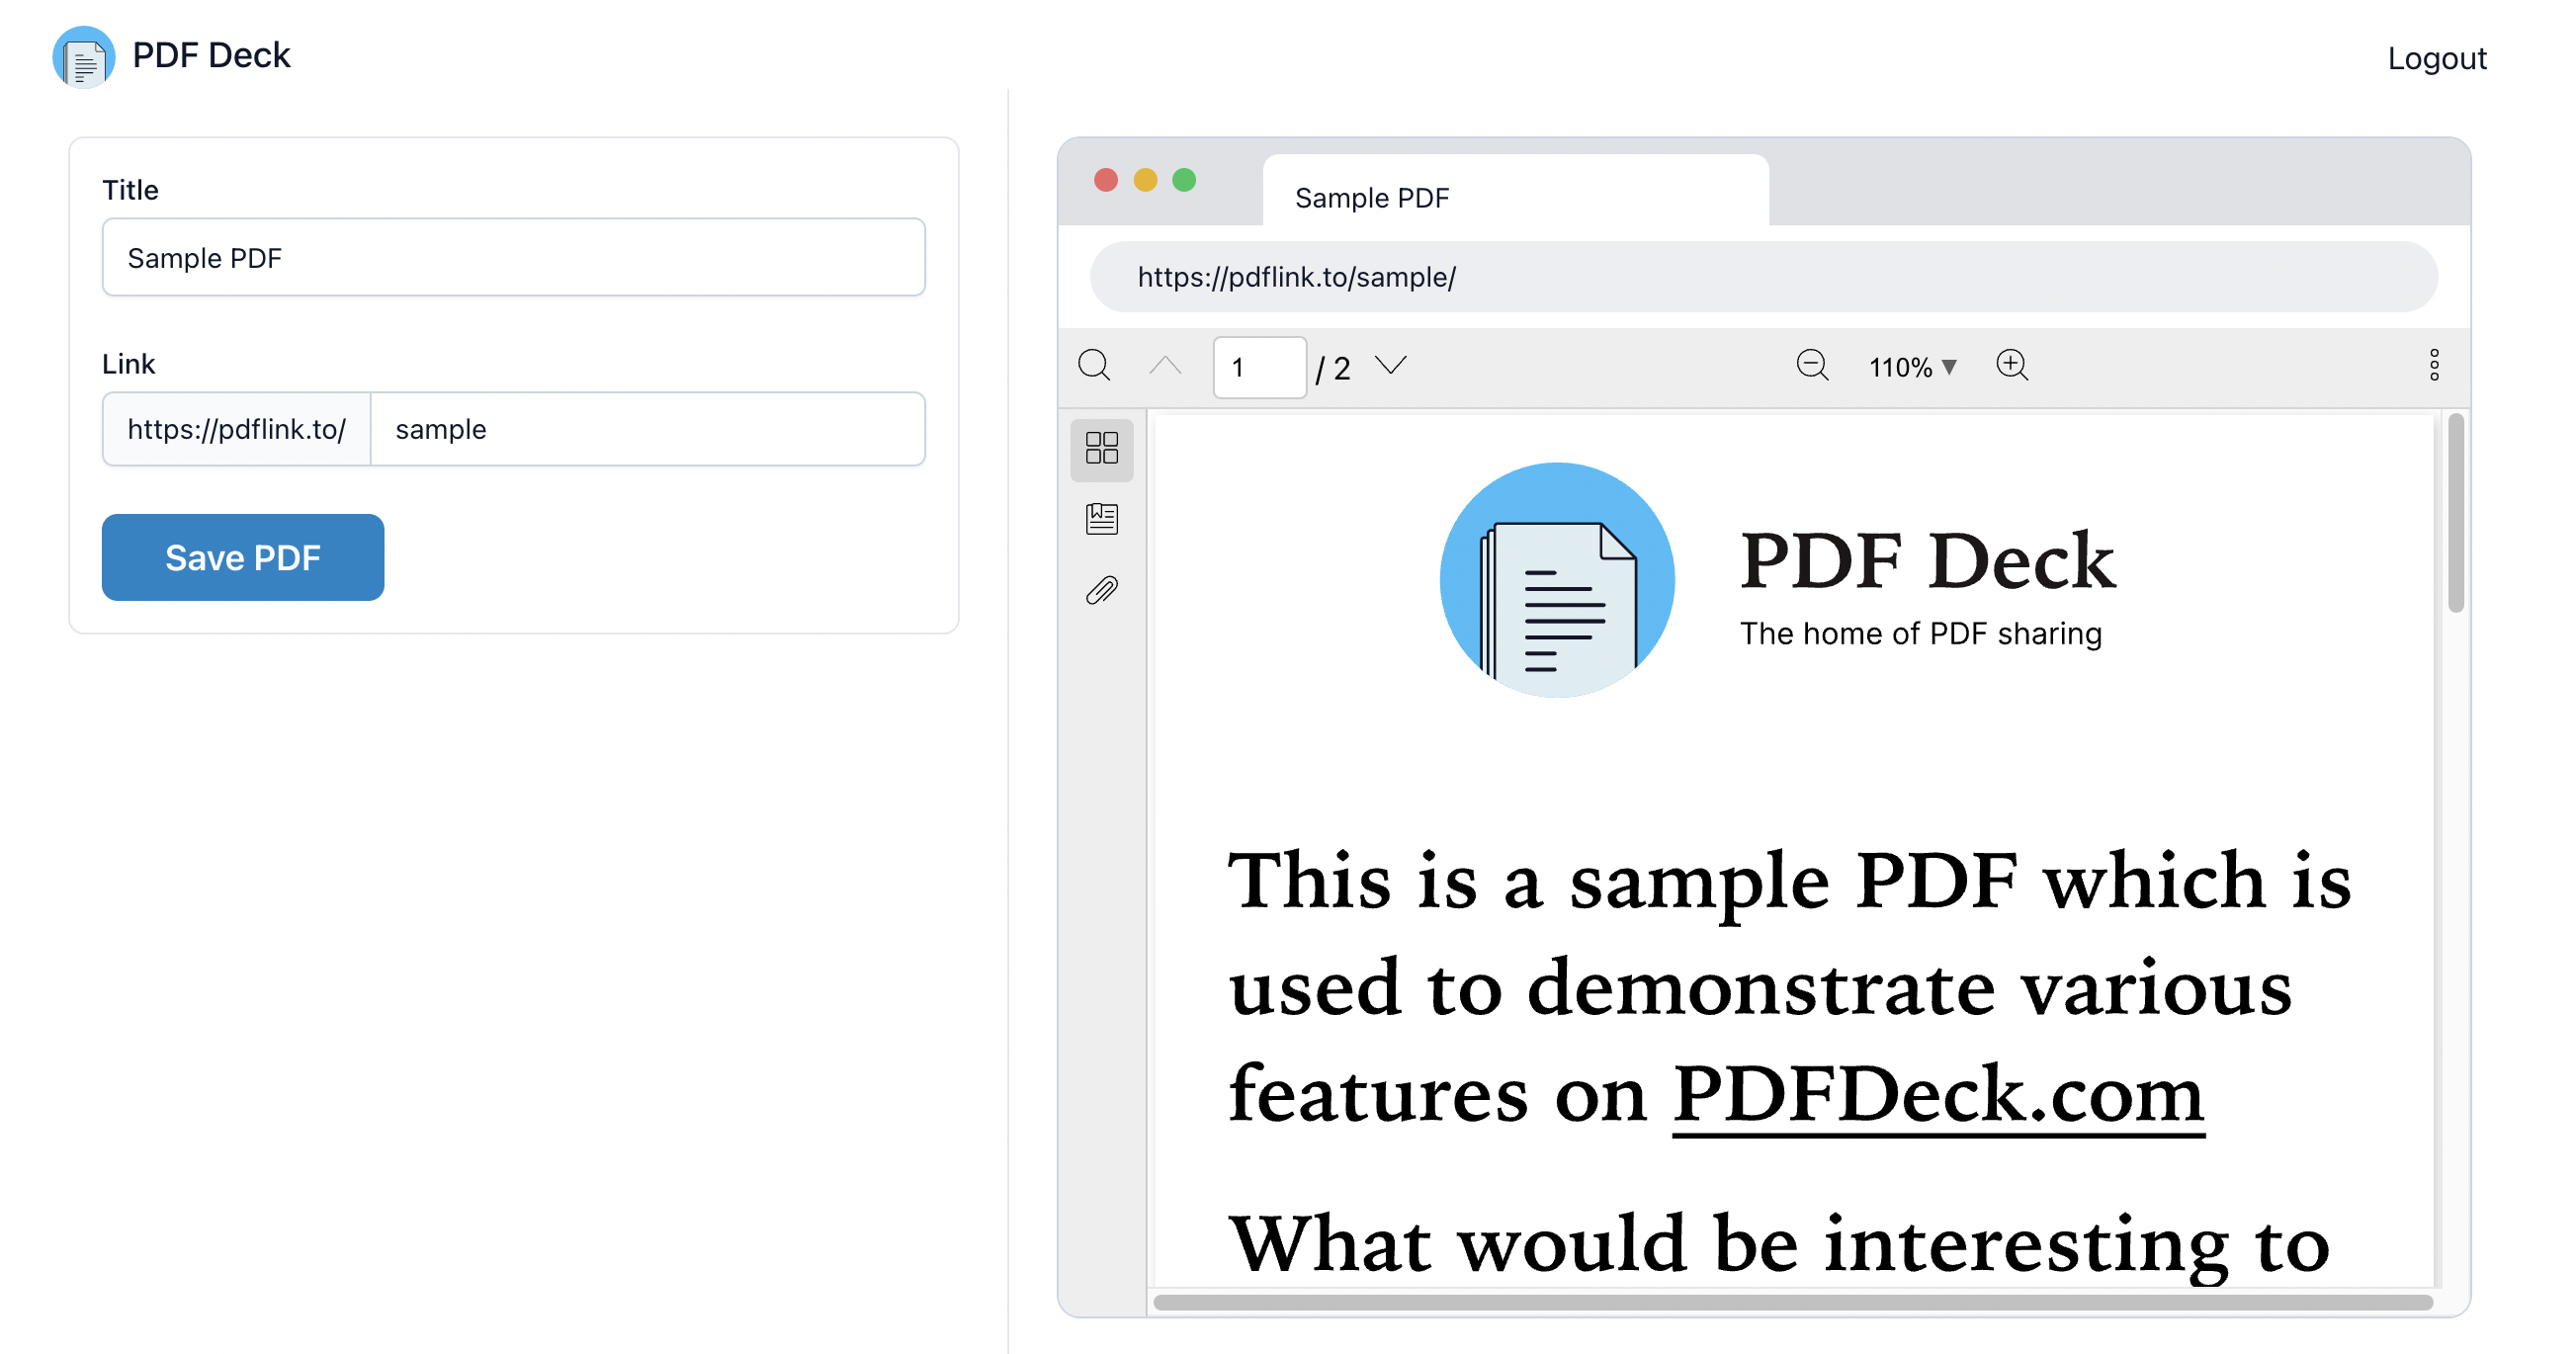 PDF Deck Uploading a PDF to share